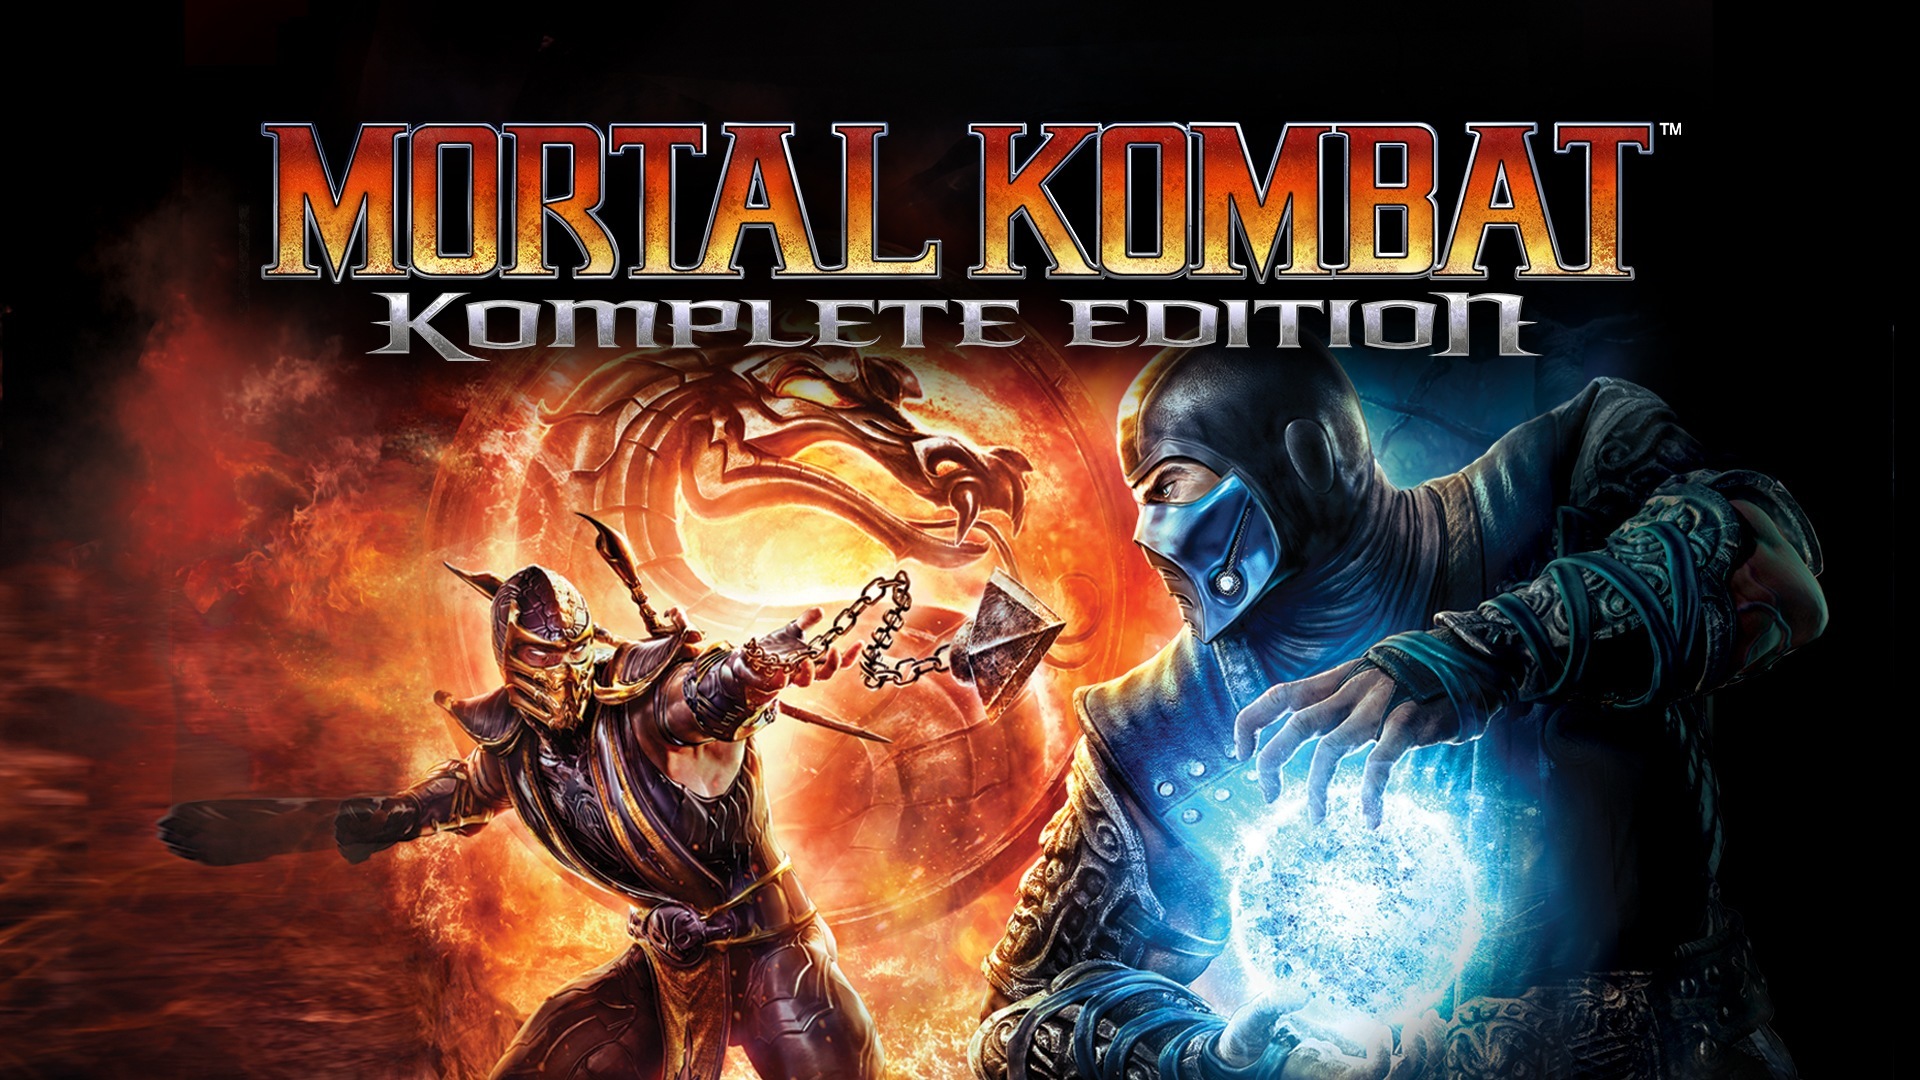 Mortal Kombat: Komplete Edition News, Rumors and Information Cool News And Rumors